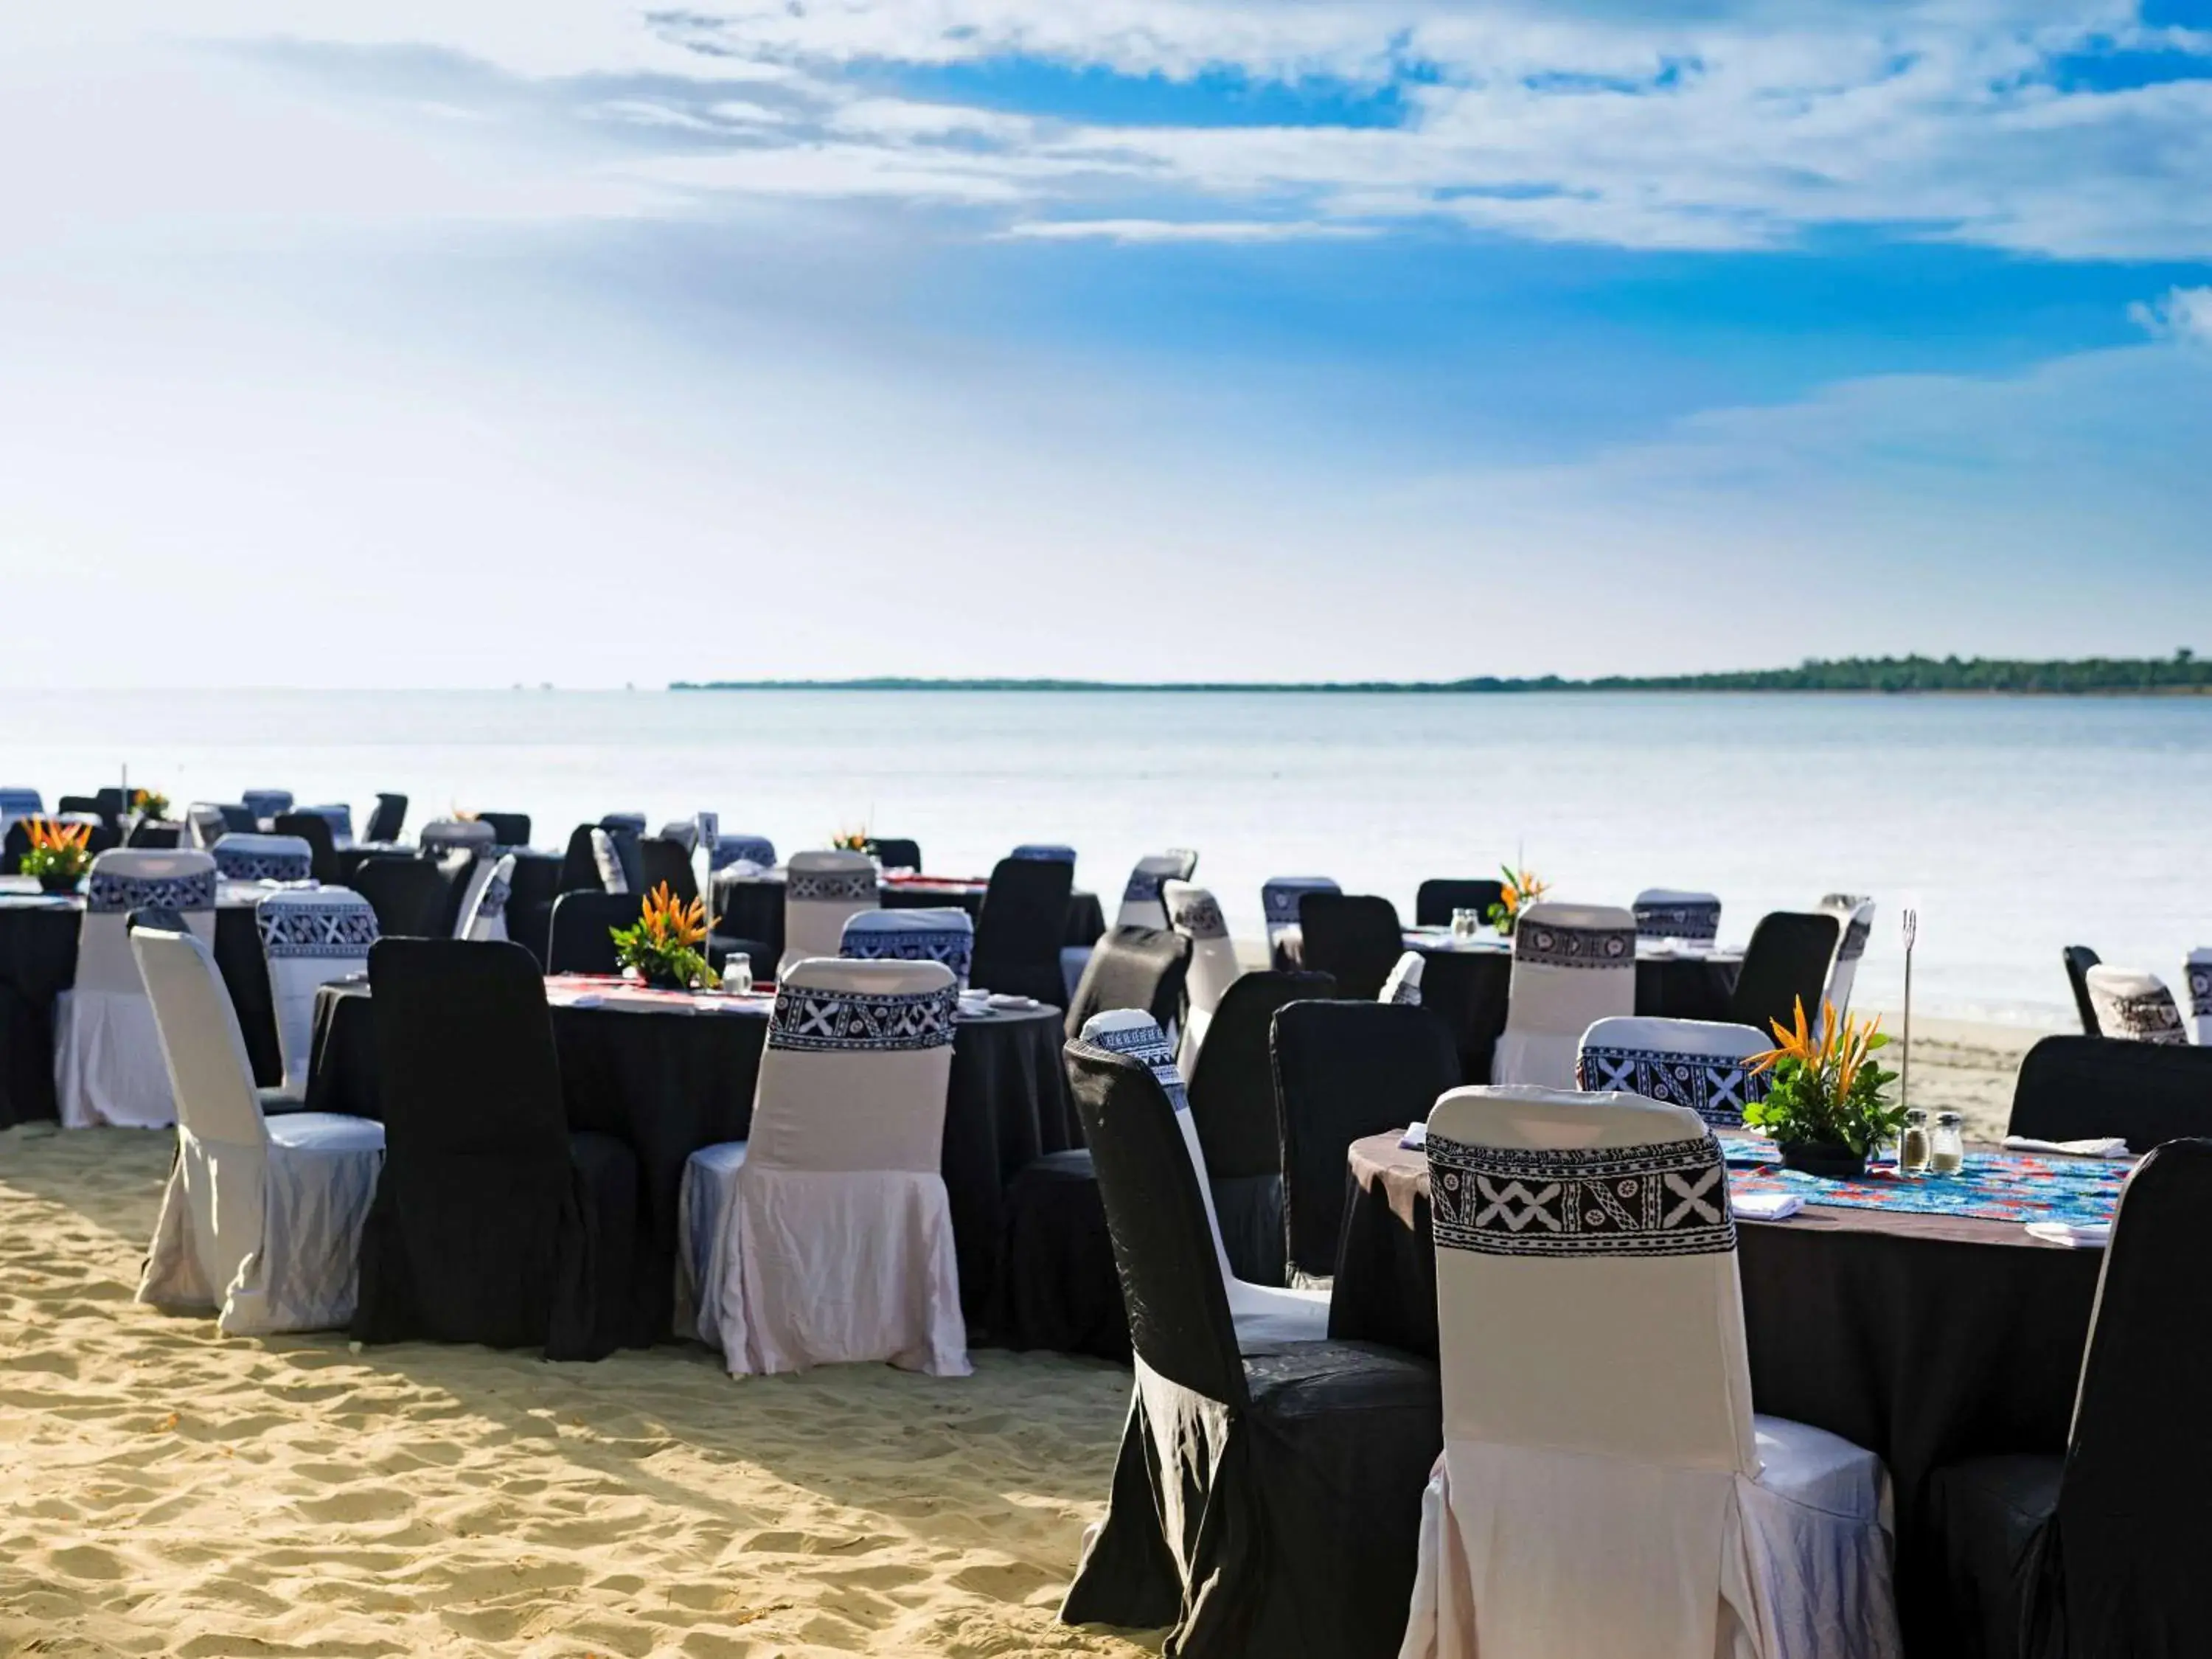 On site, Banquet Facilities in Sofitel Fiji Resort & Spa